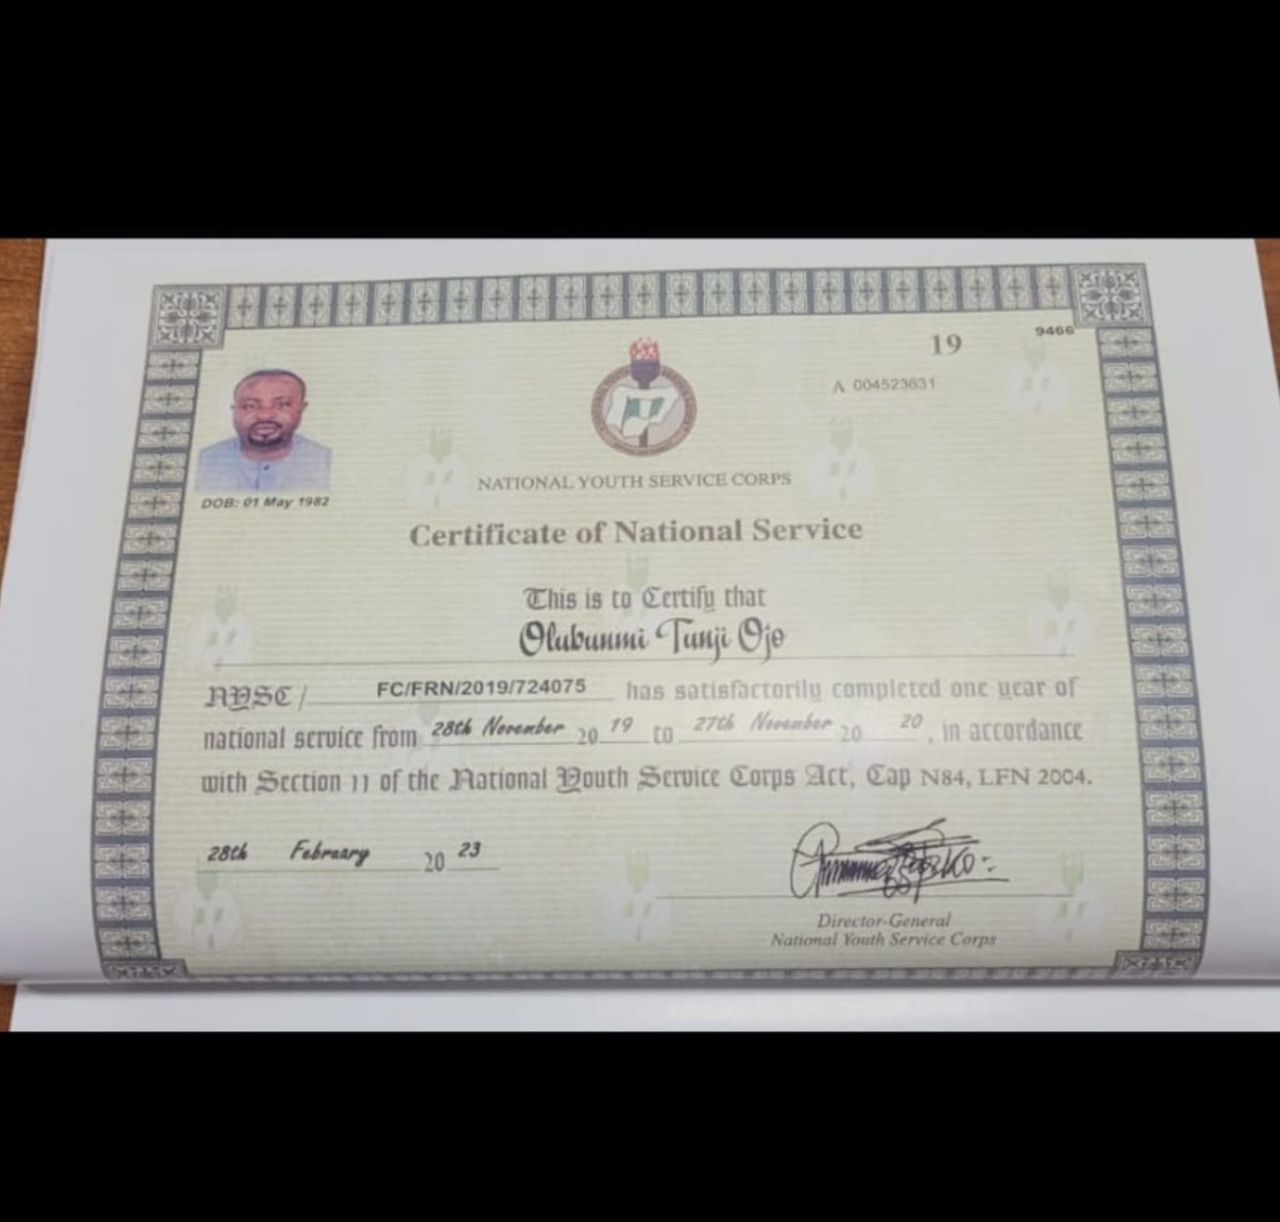 Mr Ojo's NYSC Certificate